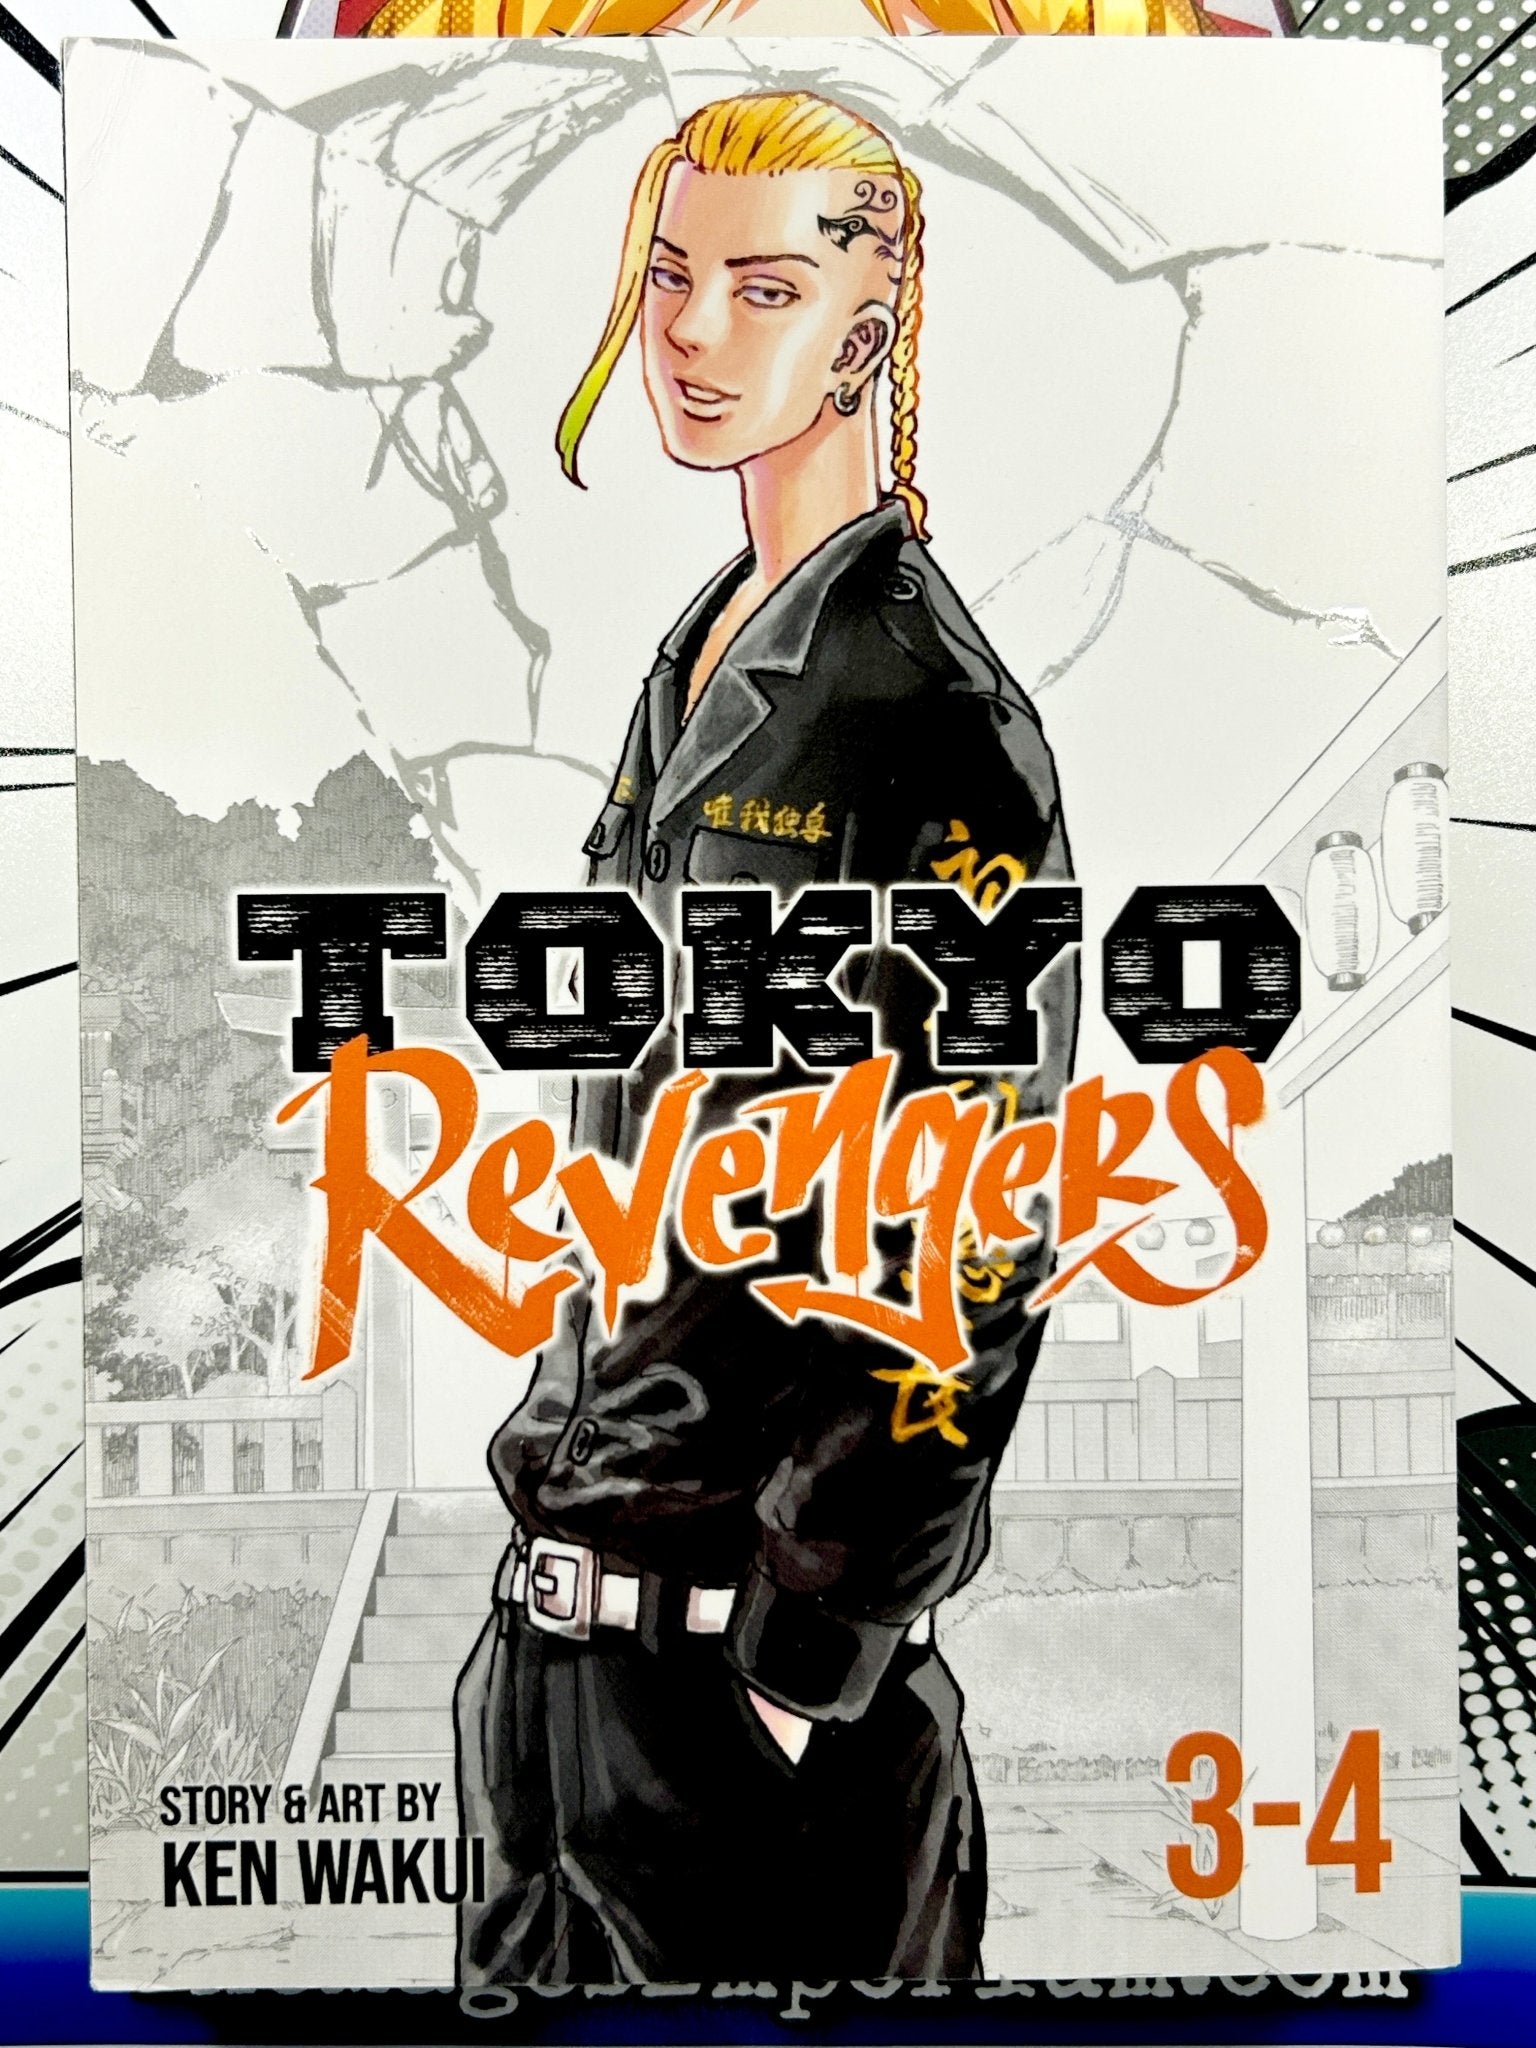 Tokyo Revengers Vol 3-4 Omnibus